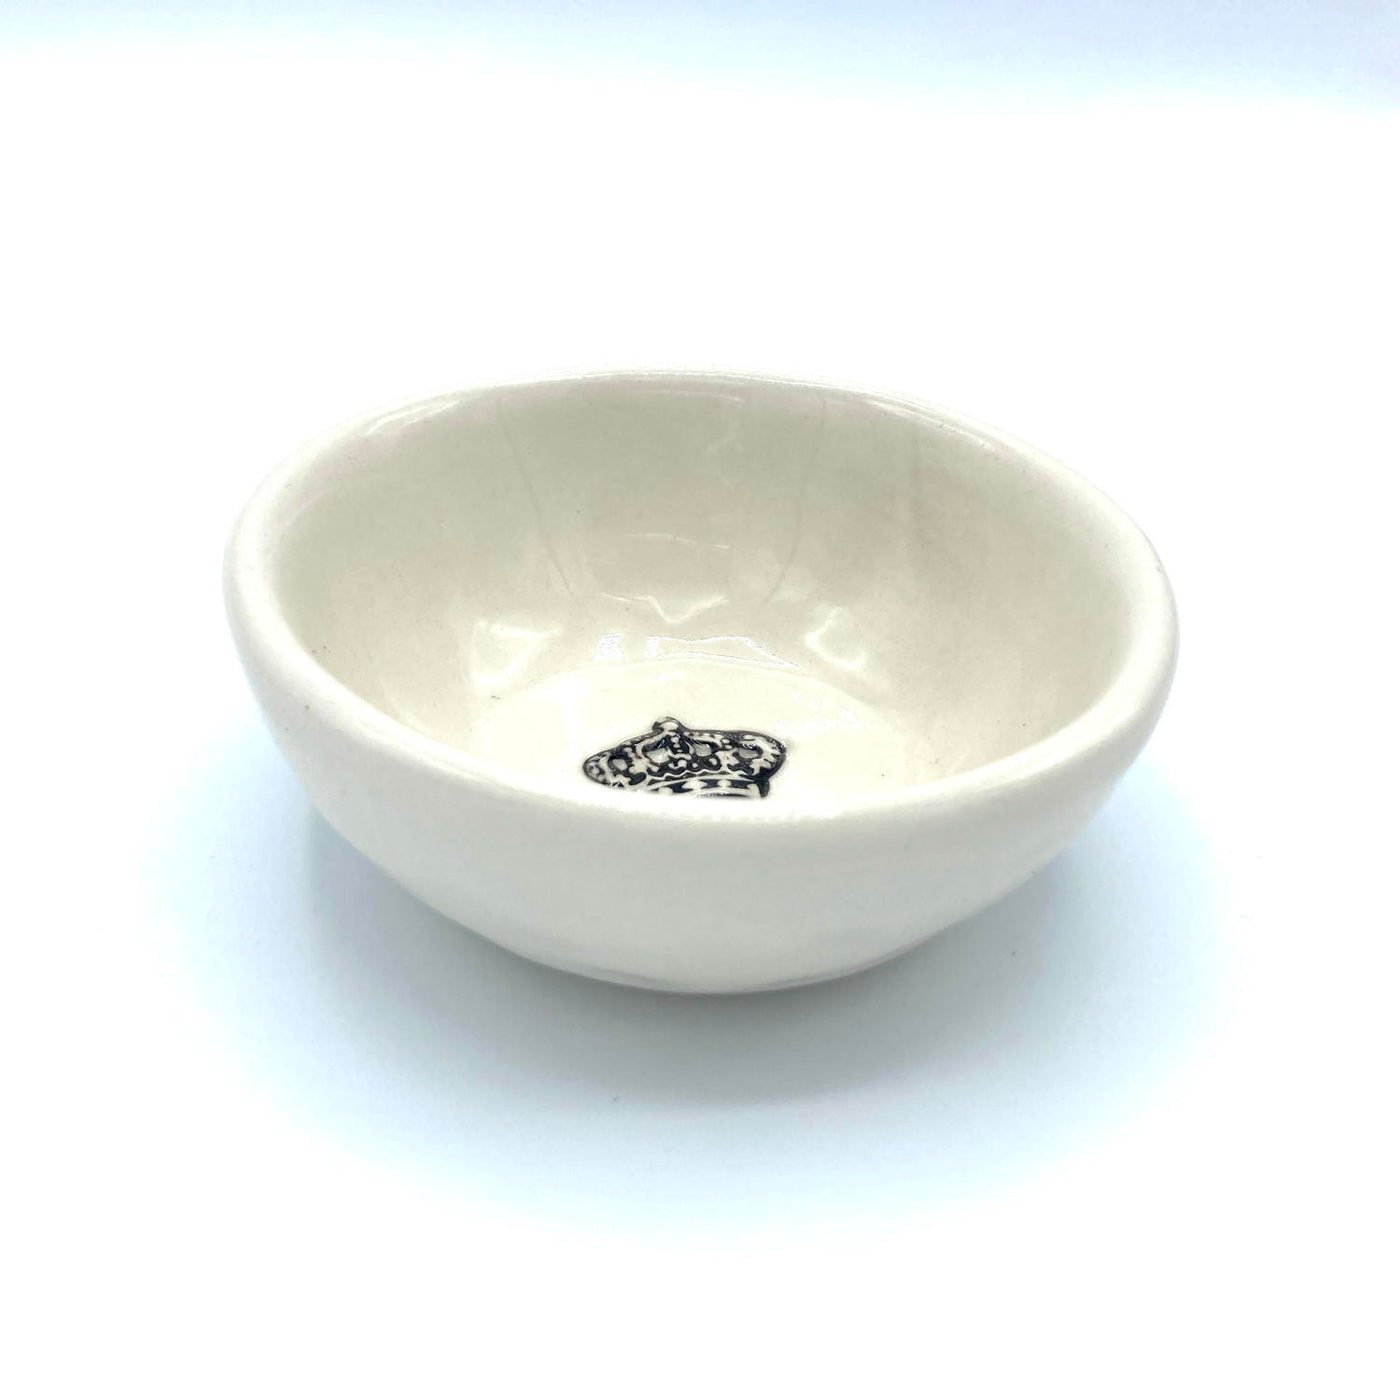 Crown Porcelain Bowl